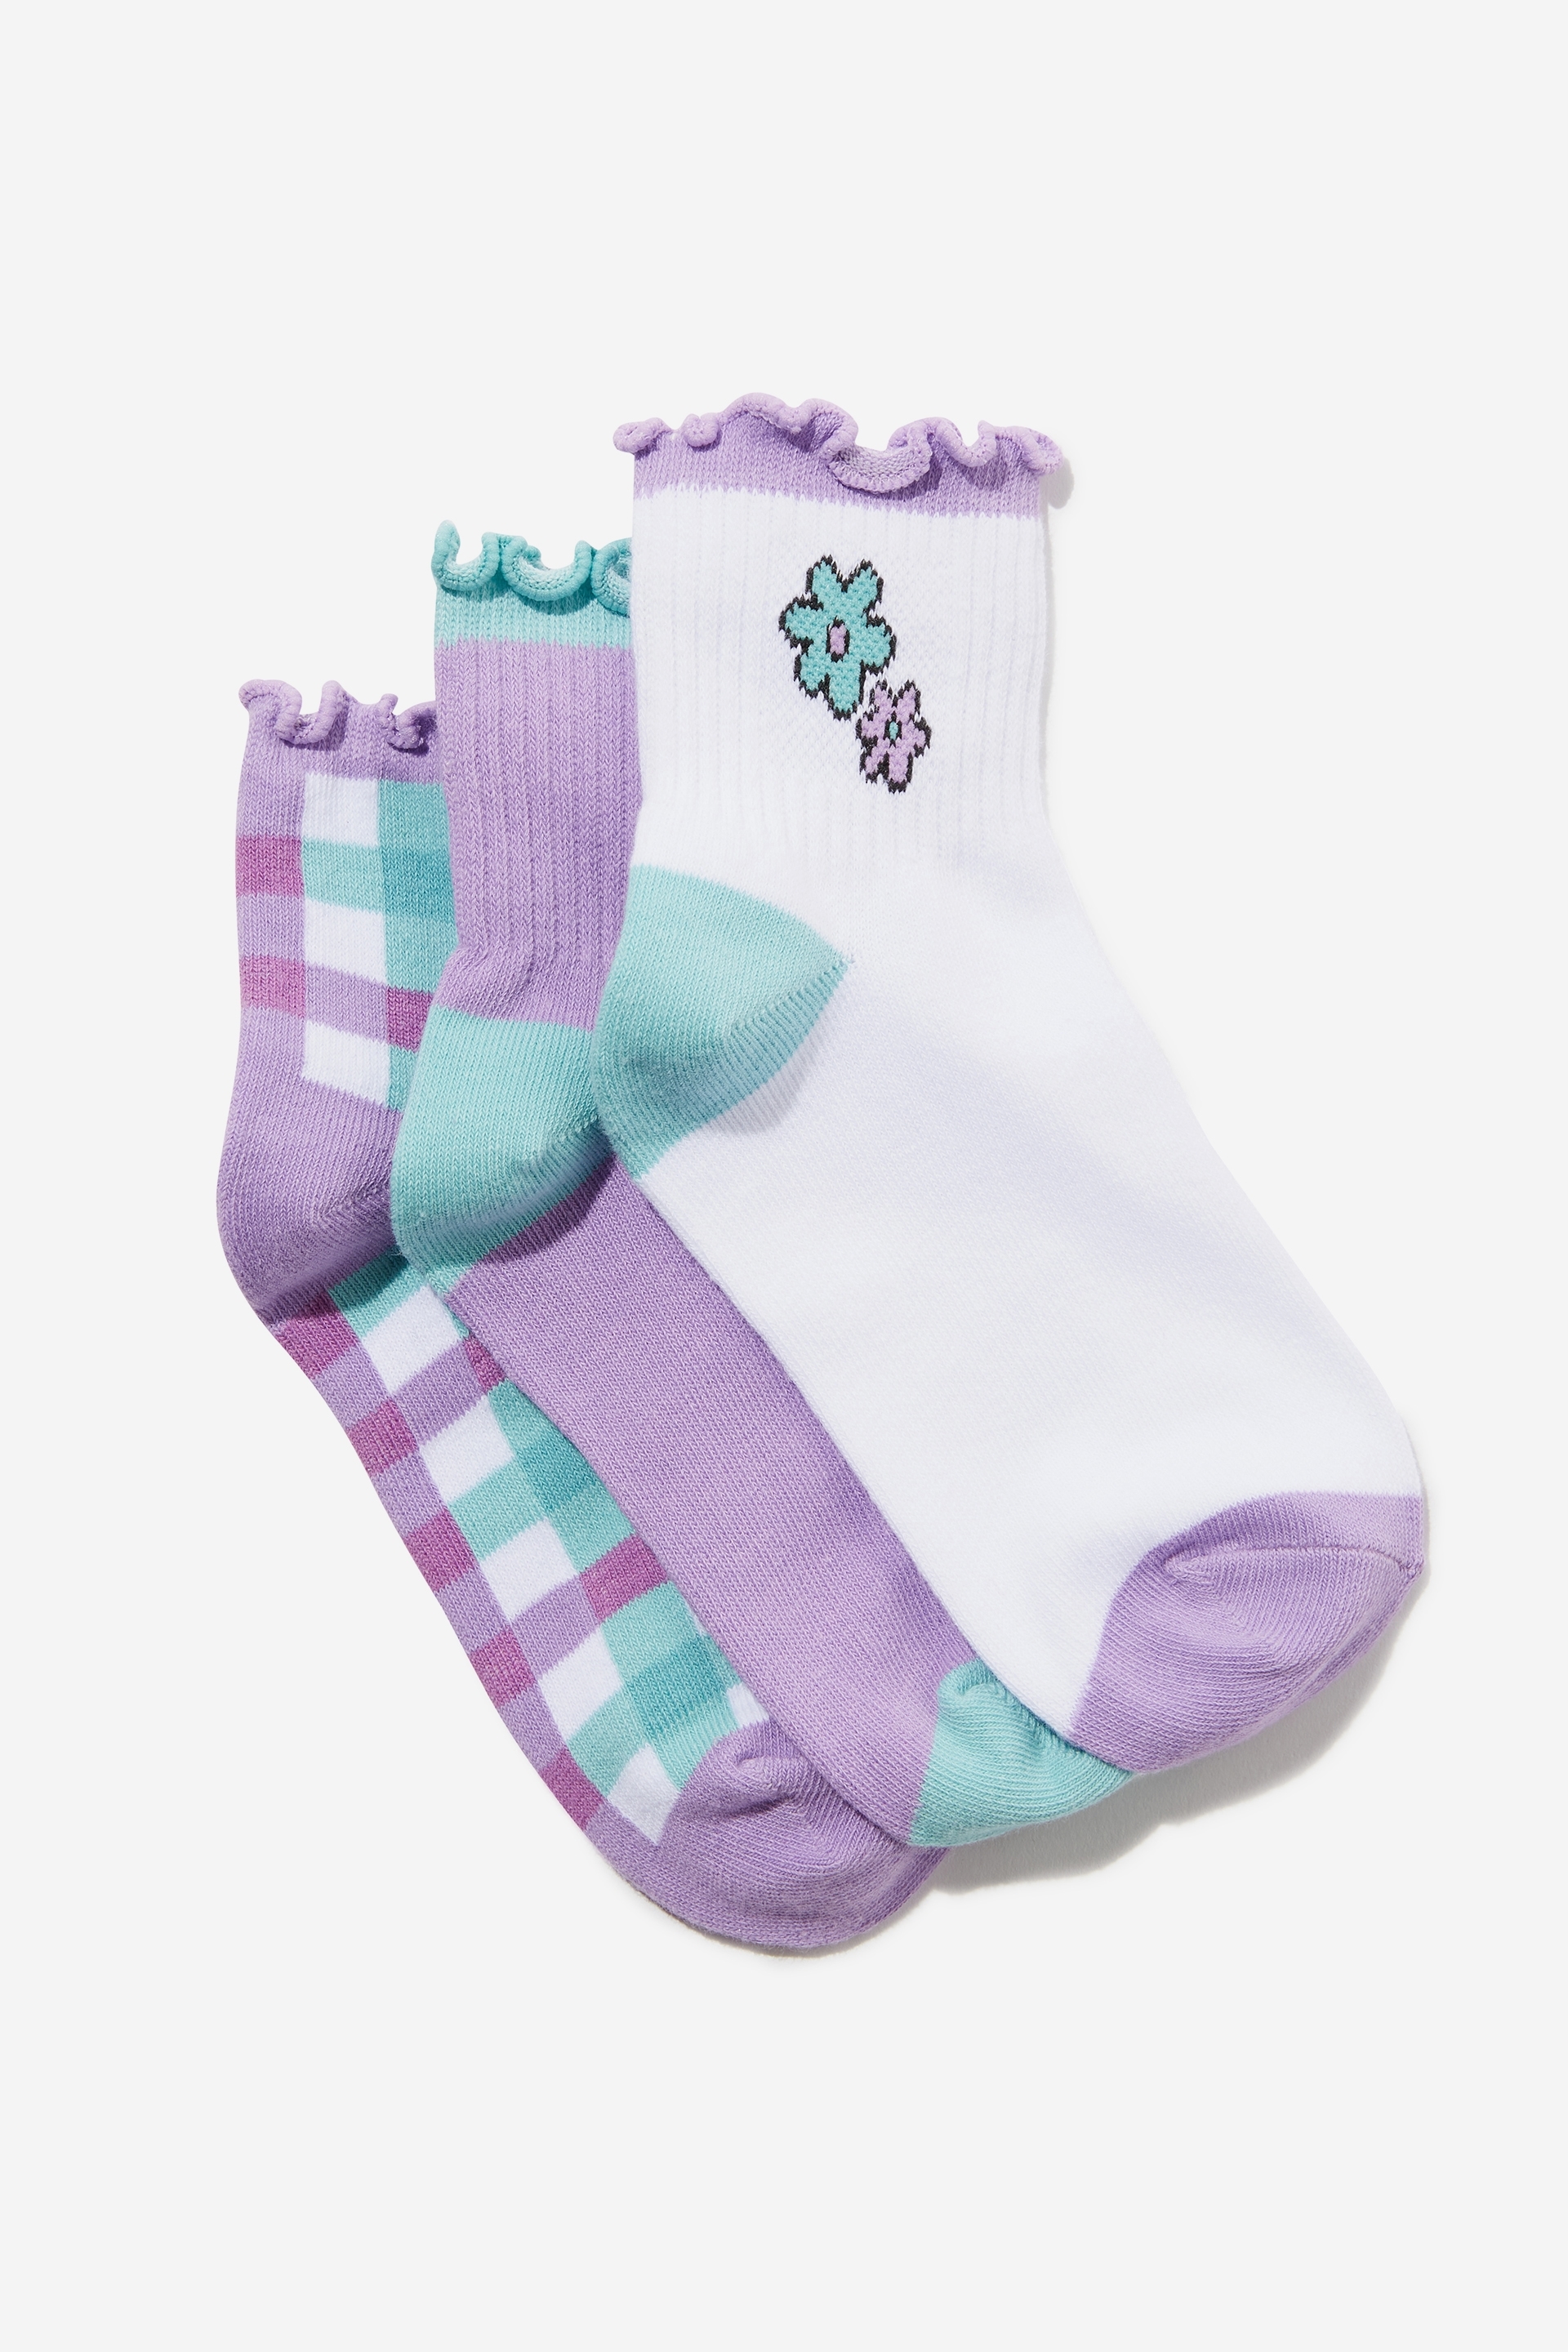 Cotton On Kids - Kids 3Pk Mid Crew Frill Socks - Multi/lilac drop check